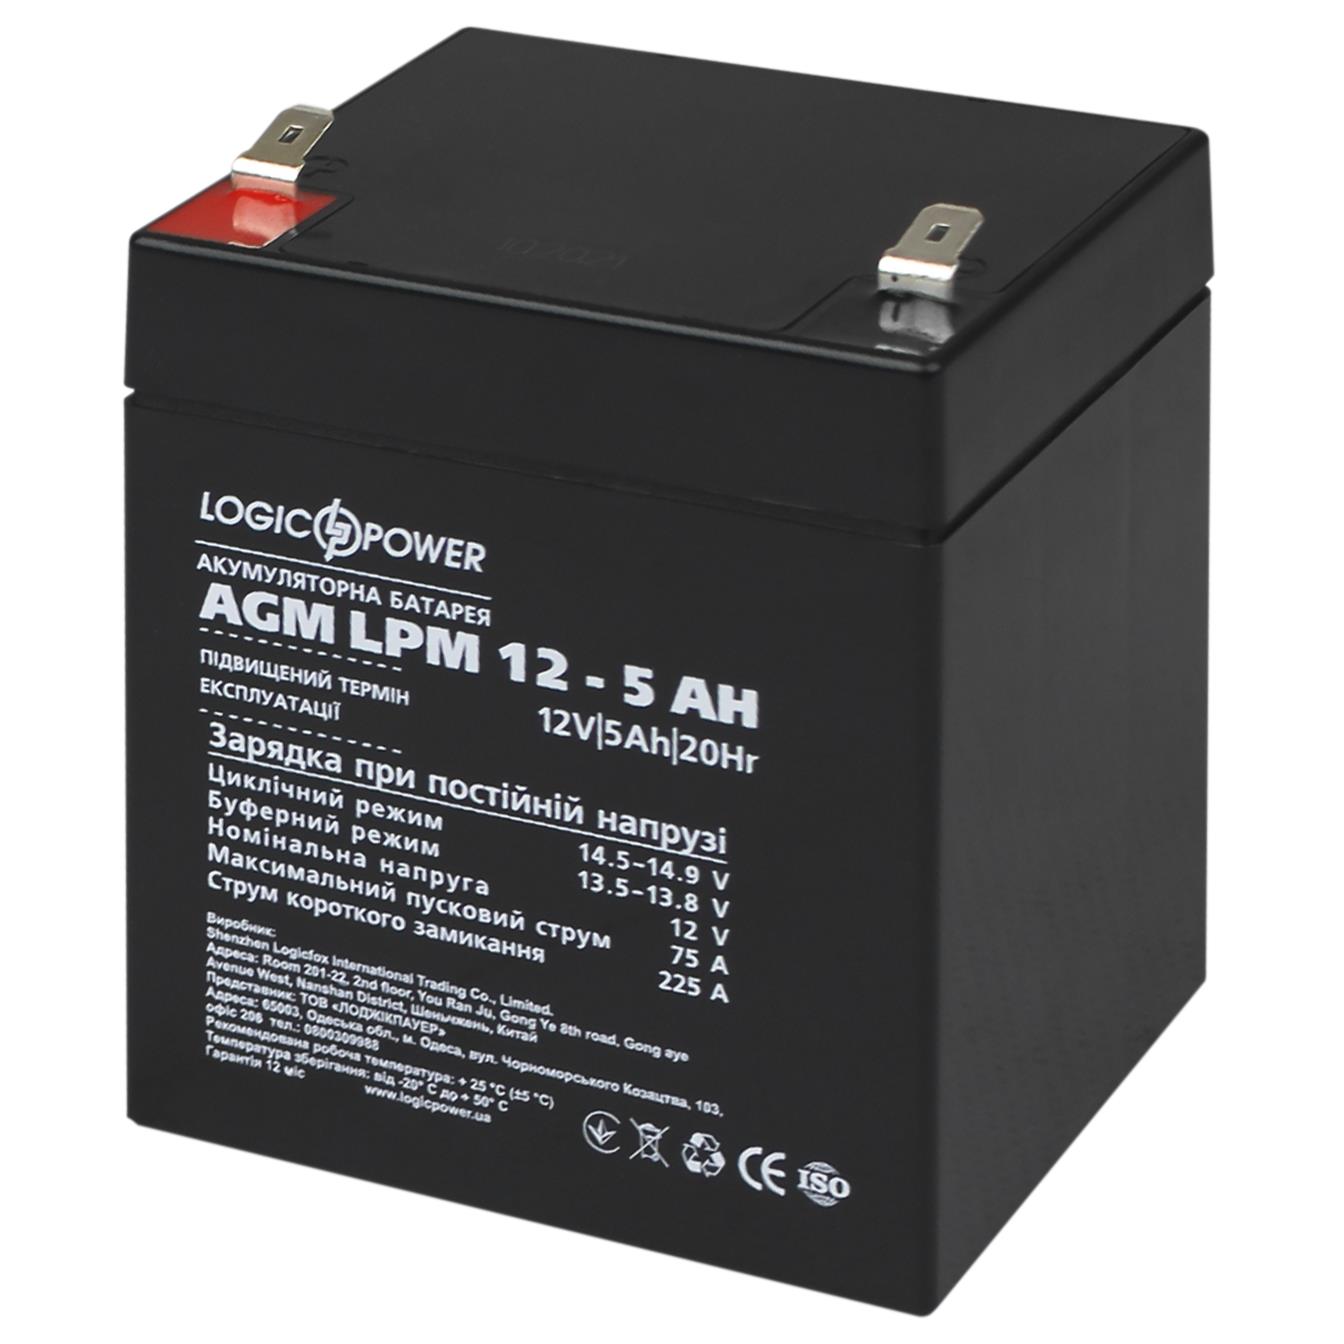 LogicPower AGM LPM 12V - 5 Ah (3861)